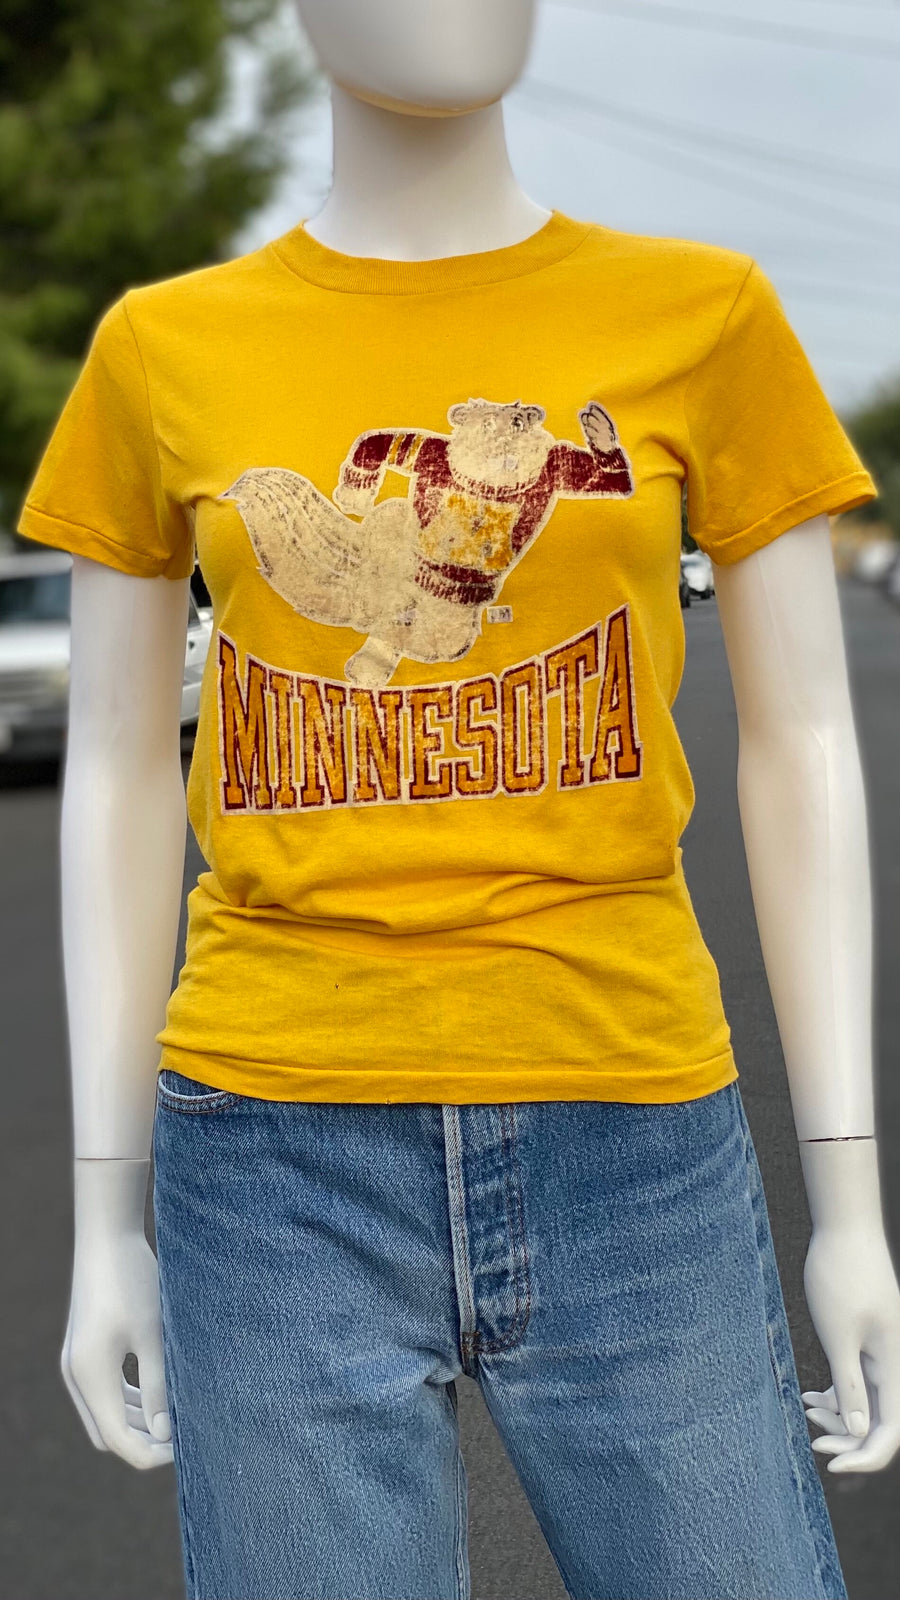 U. of Minnesota T-shirt